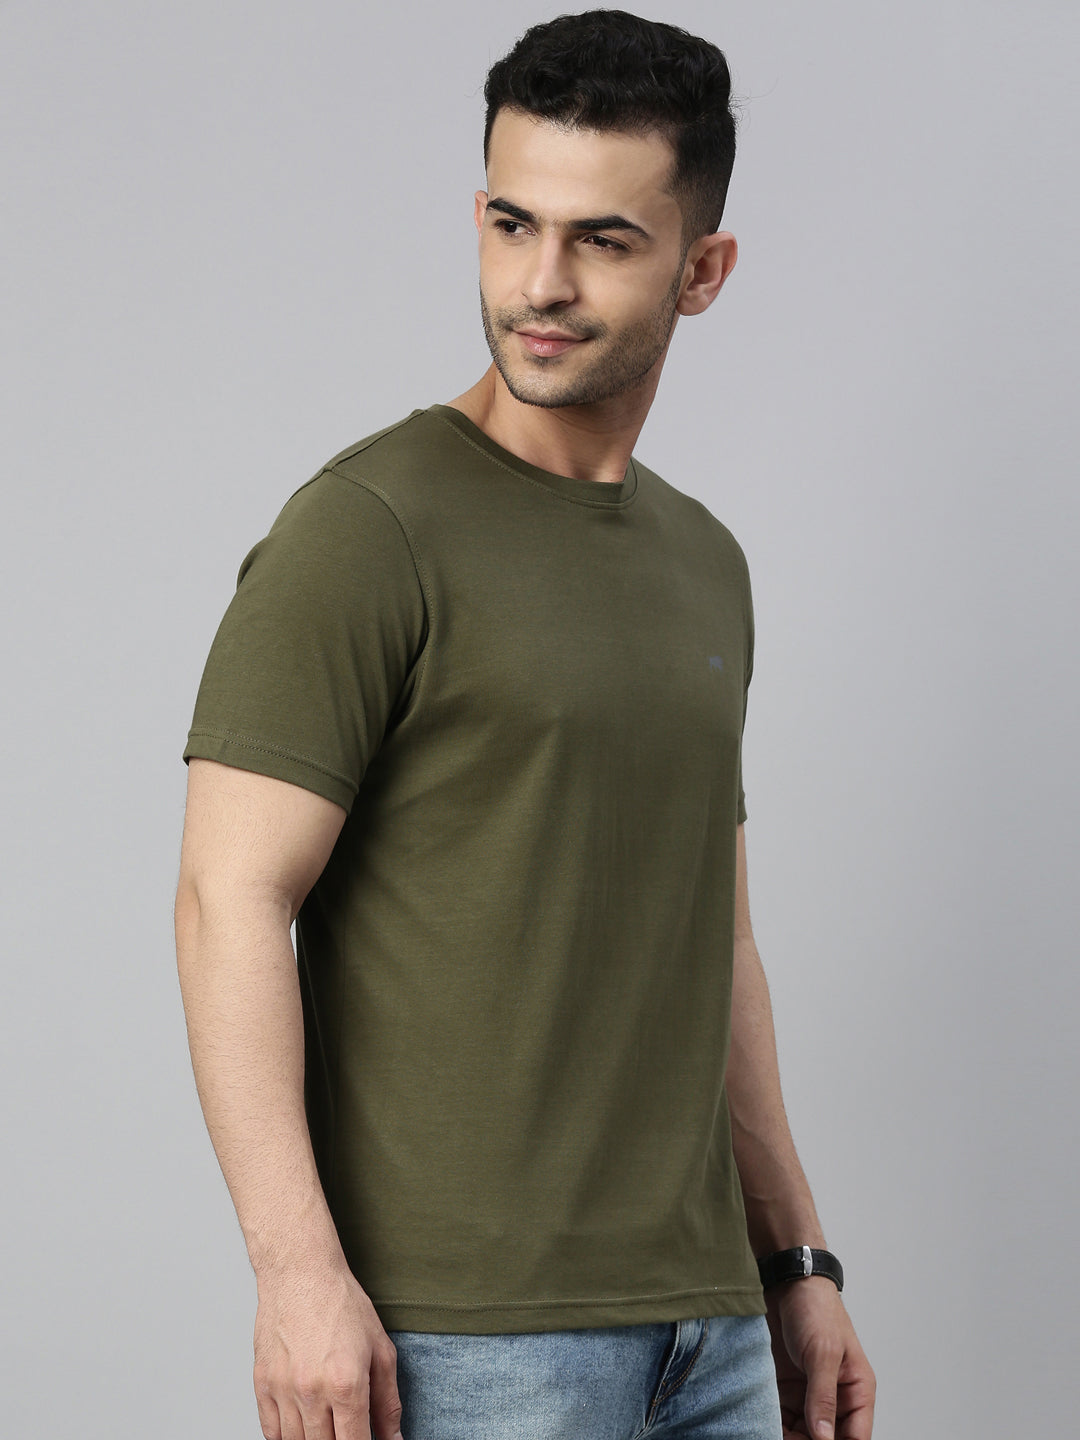 Military Green Solid Half Sleeves T-Shirt Plain T-Shirts Bushirt   